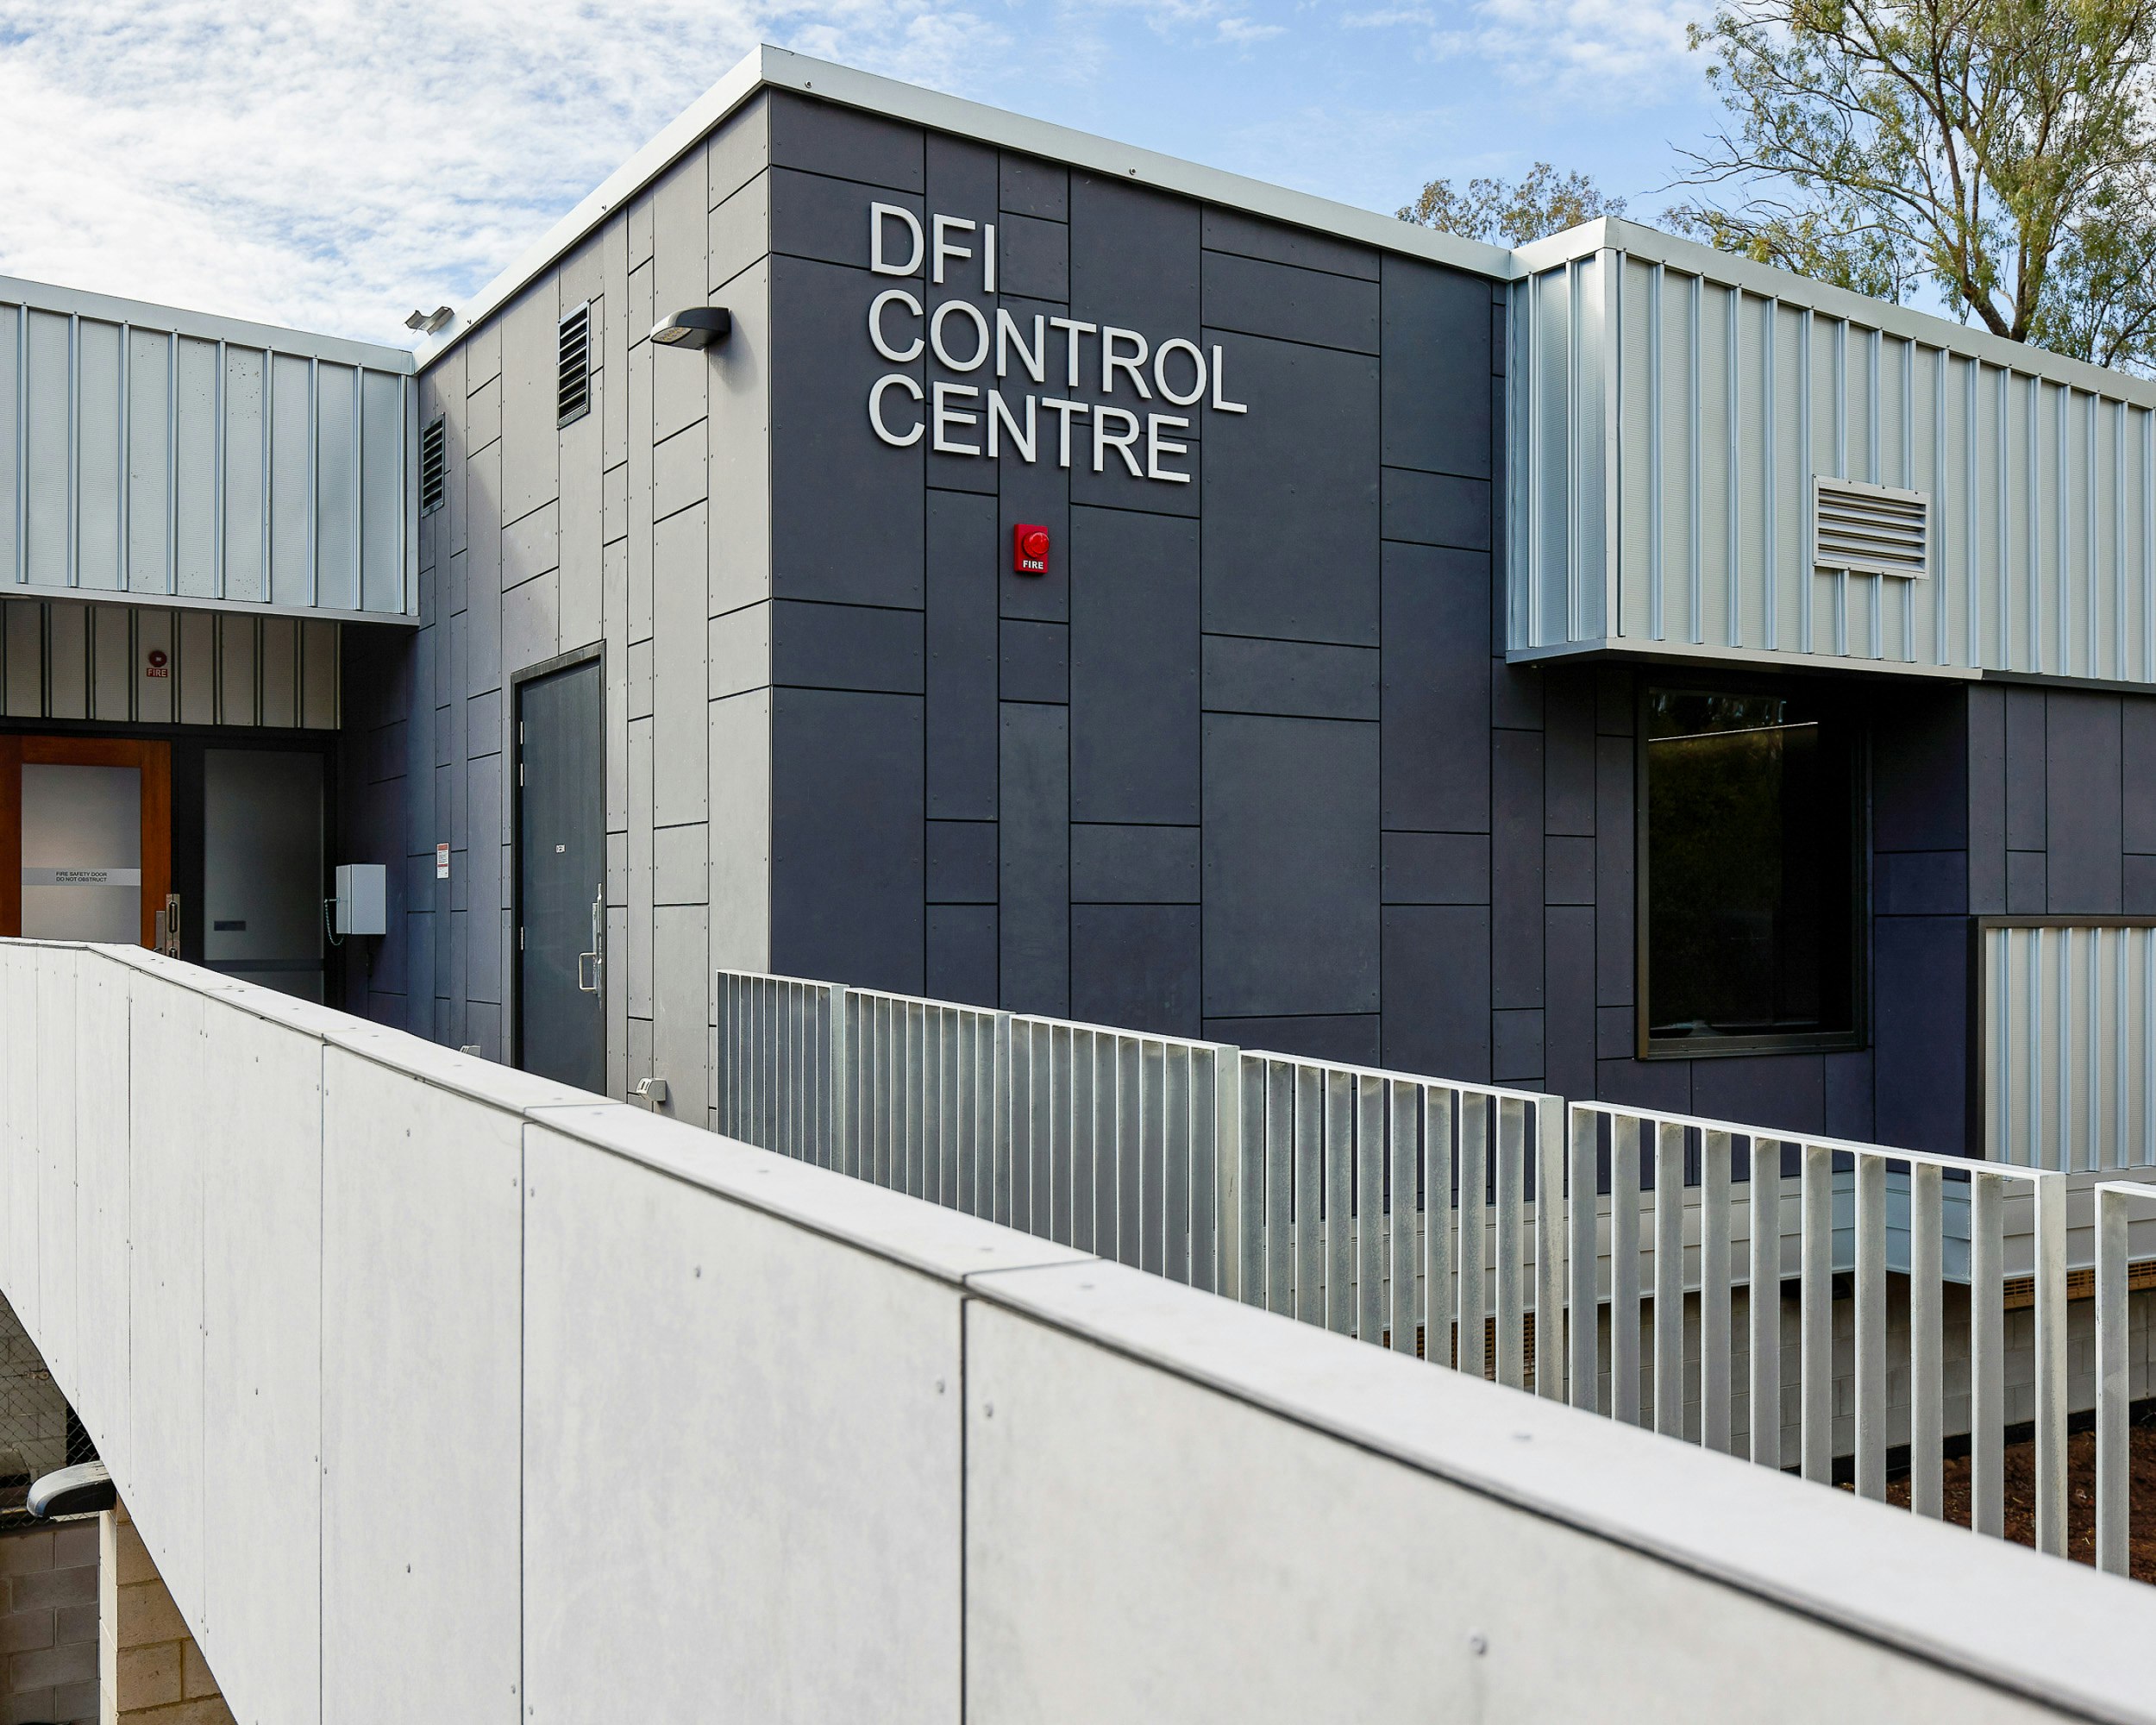 RAAF Amberley DFI Control Centre